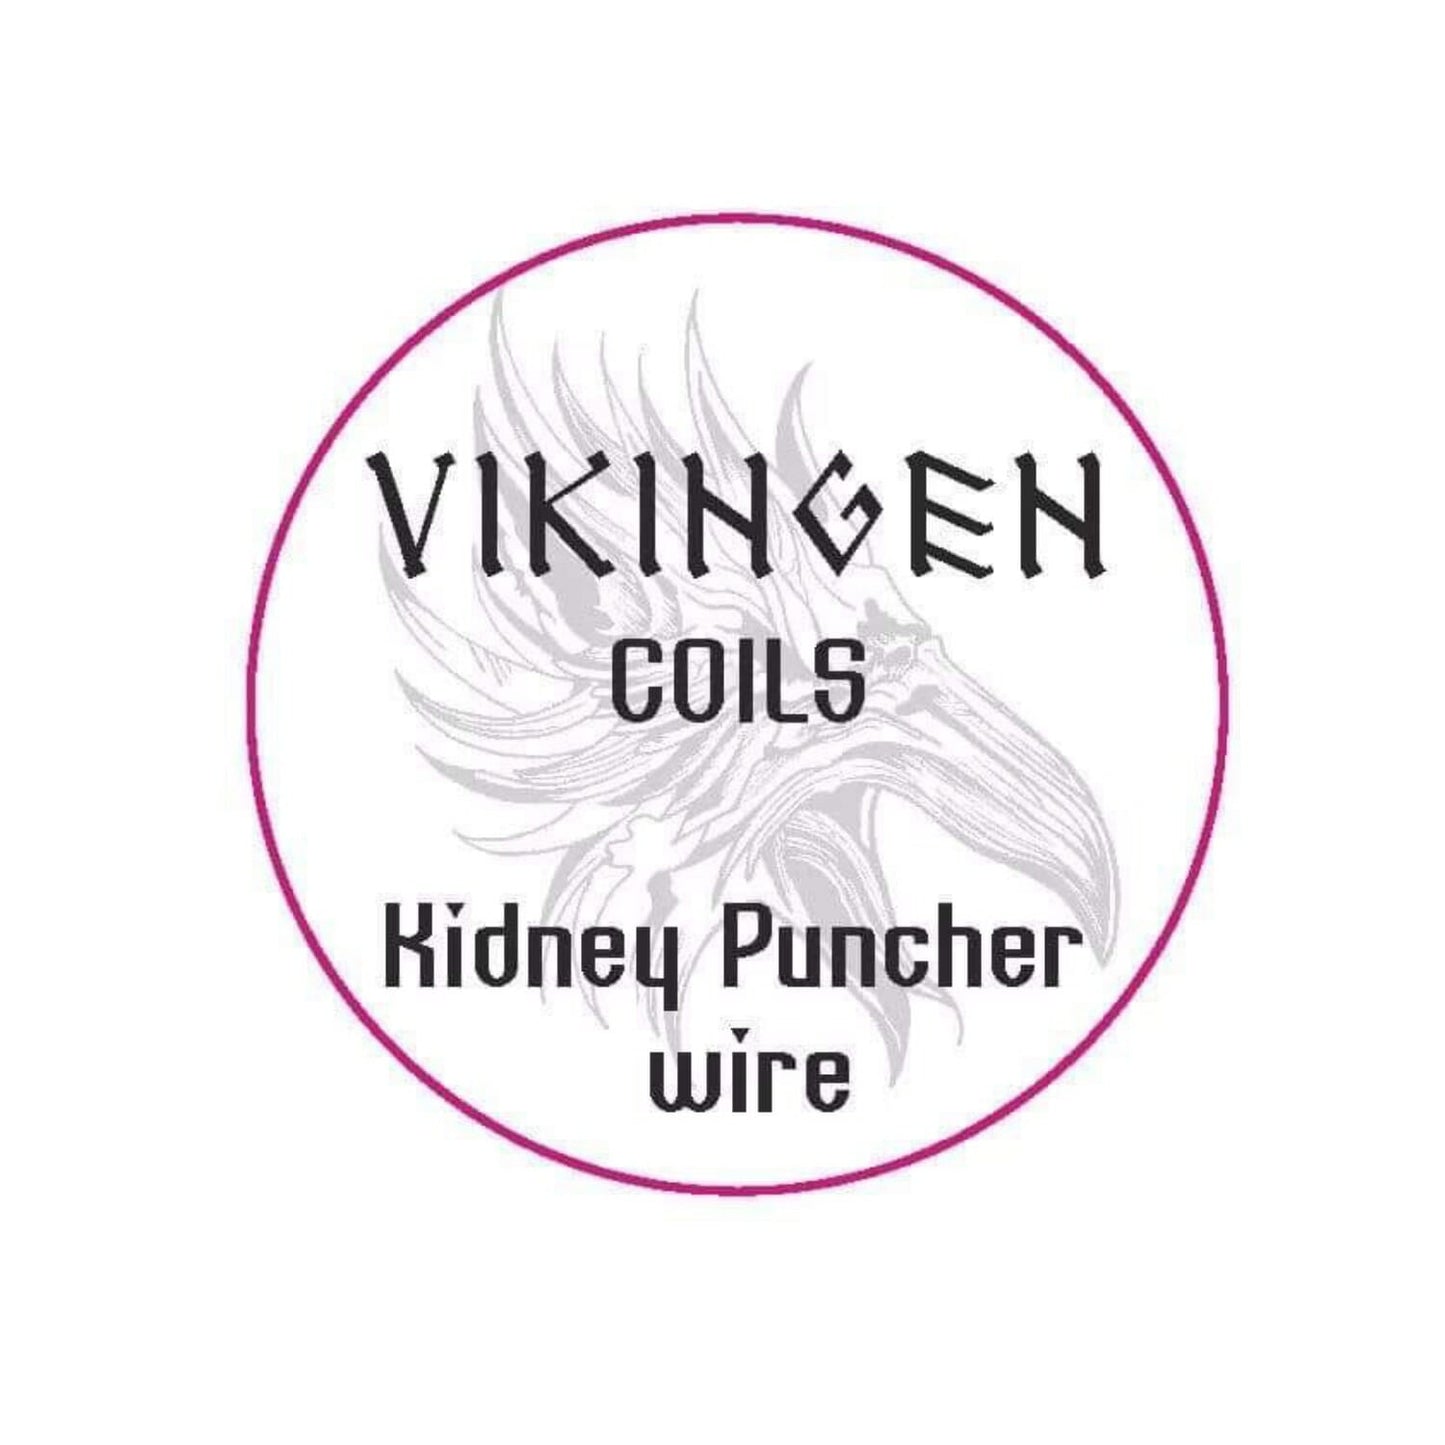 Vikingen │ Coils Fused Clapton │ Kidney Puncher